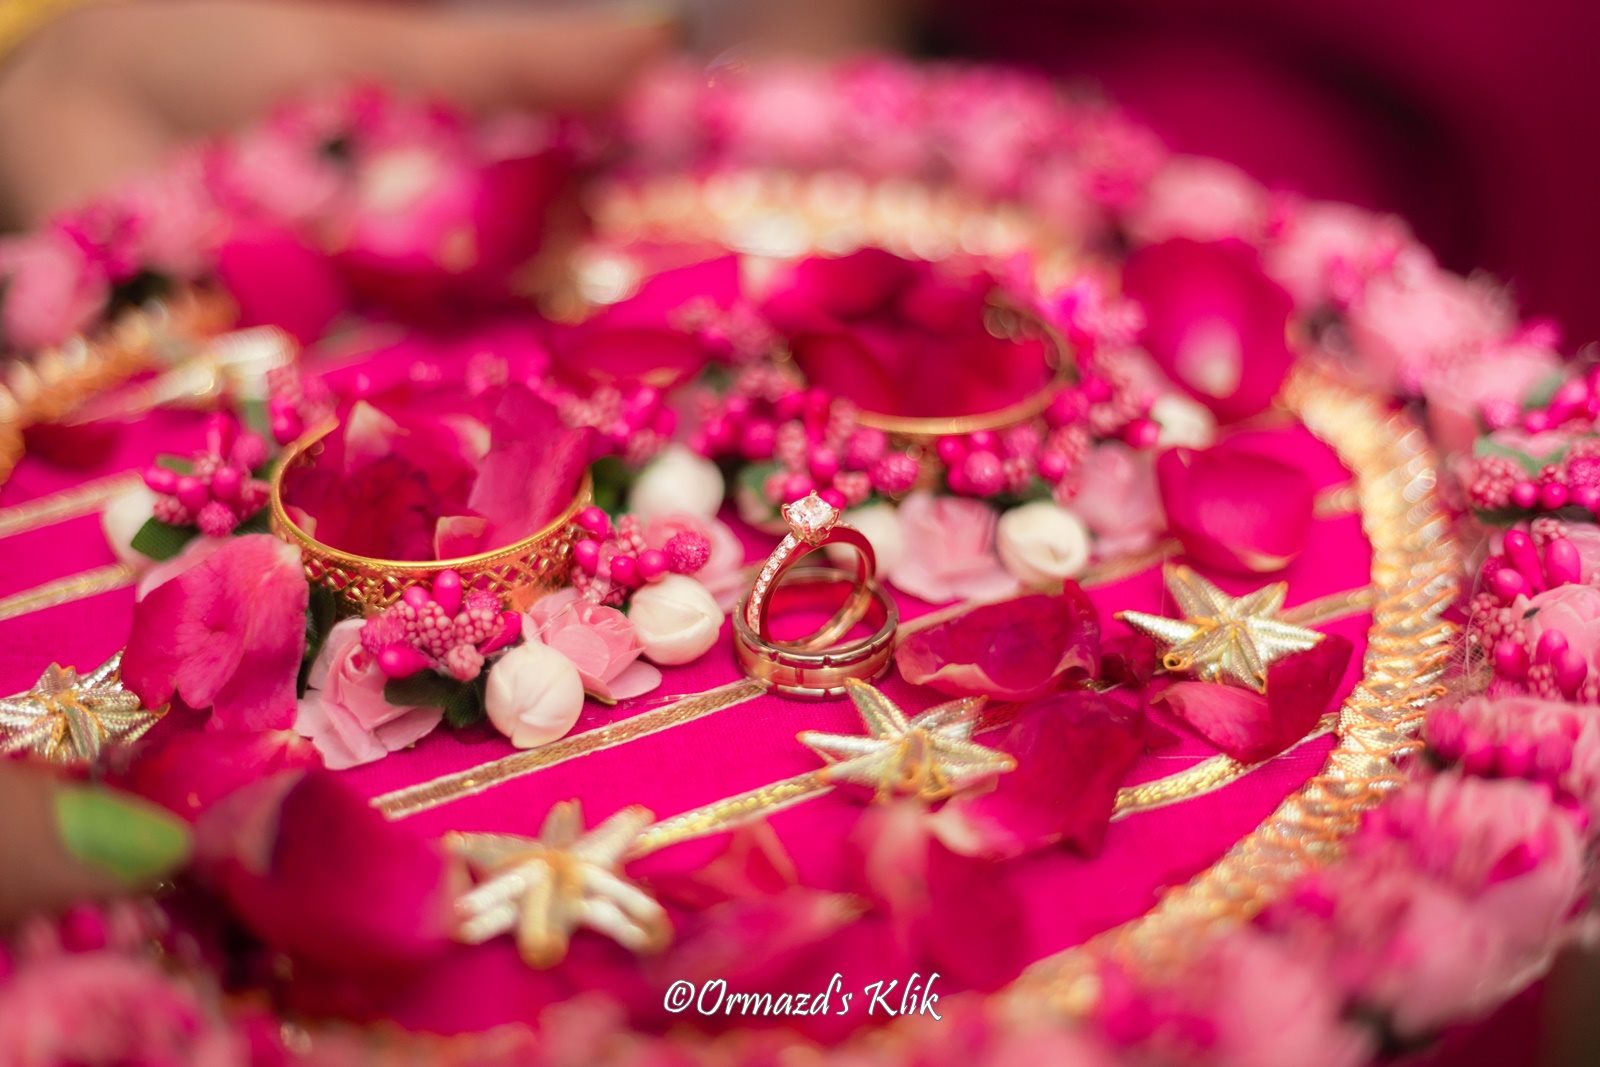 Ormazd's Klik Wedding Photographer, Delhi NCR